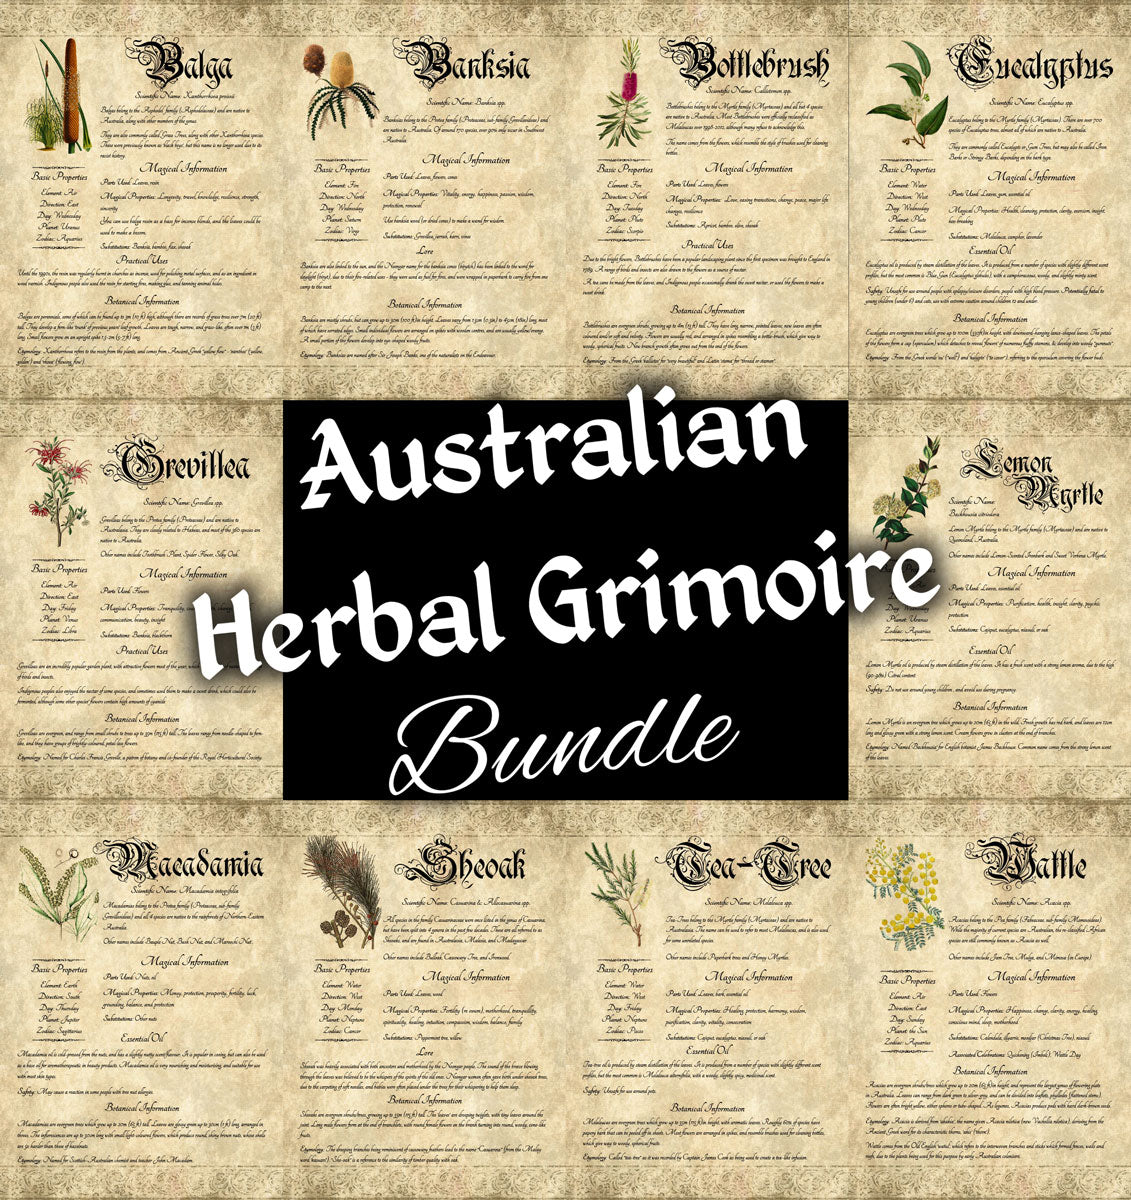 Collage of antique-style grimoire pages; central text "Australian Herbal Grimoire Bundle"